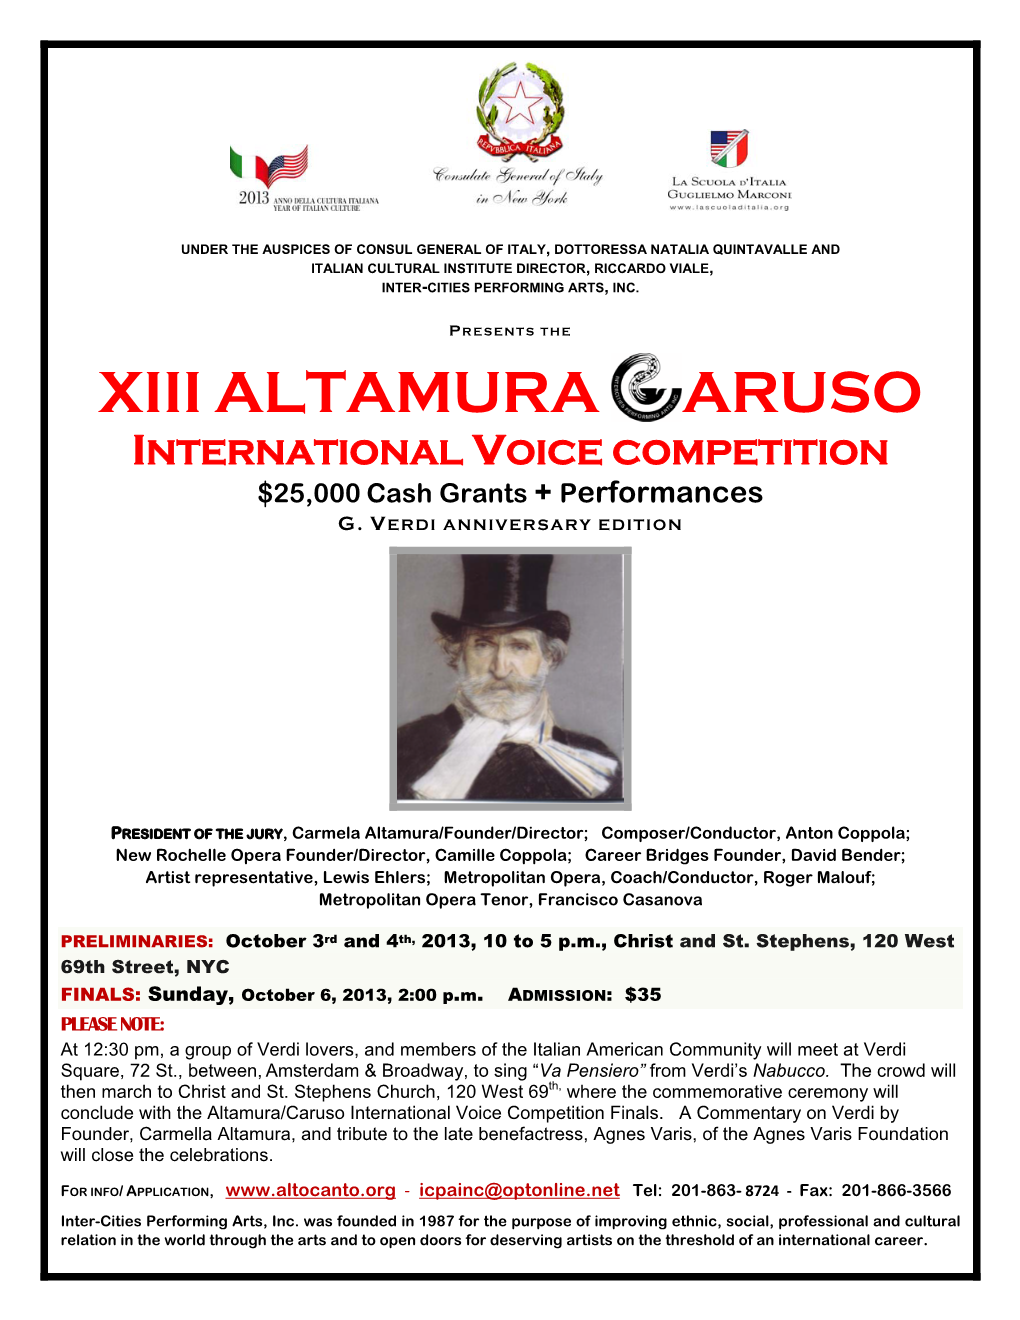 XIII ALTAMURA ARUSO INTERNATIONAL VOICE COMPETITION $25,000 Cash Grants + Performances